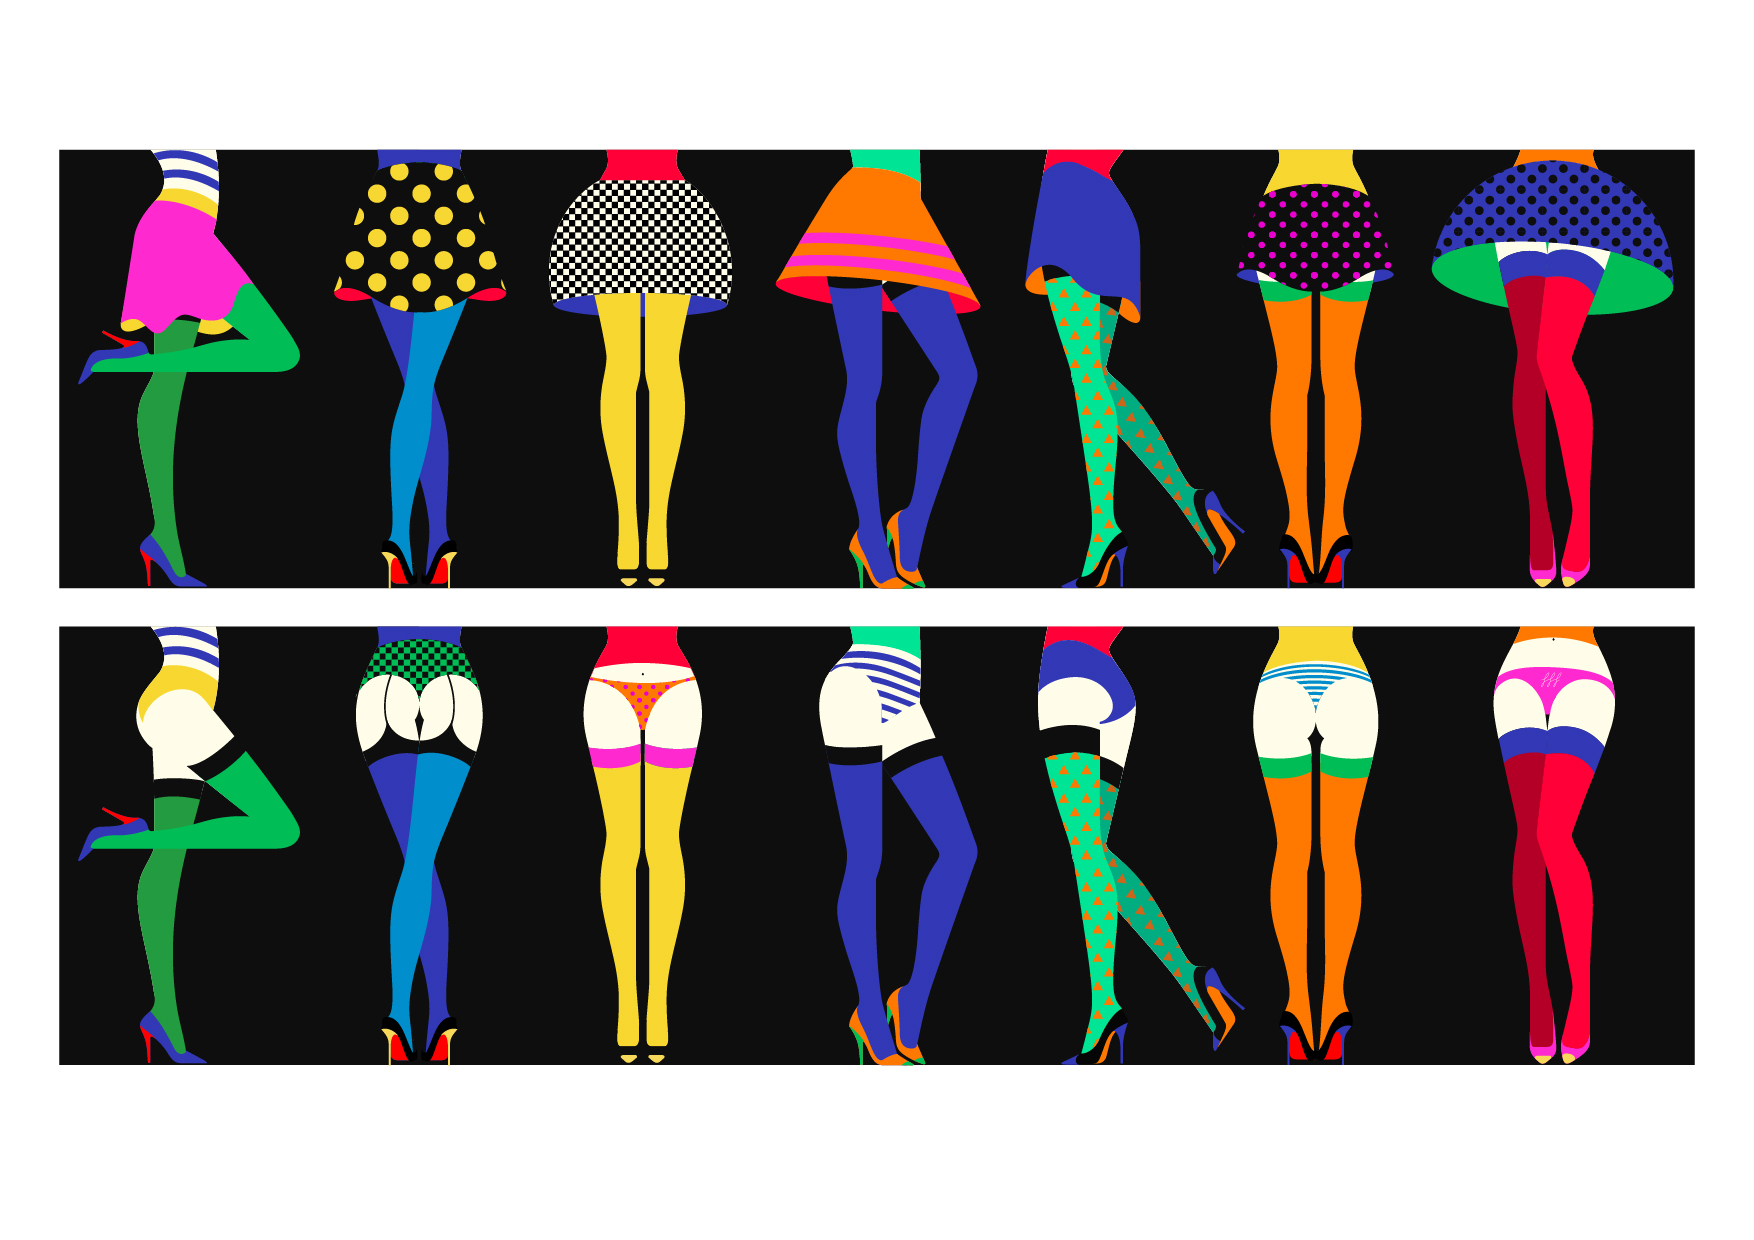 General 1754x1240 digital art Malika Favre women legs panties skirt high heels polka dots colorful pantyhose stockings ass minimalism miniskirt vector vector art